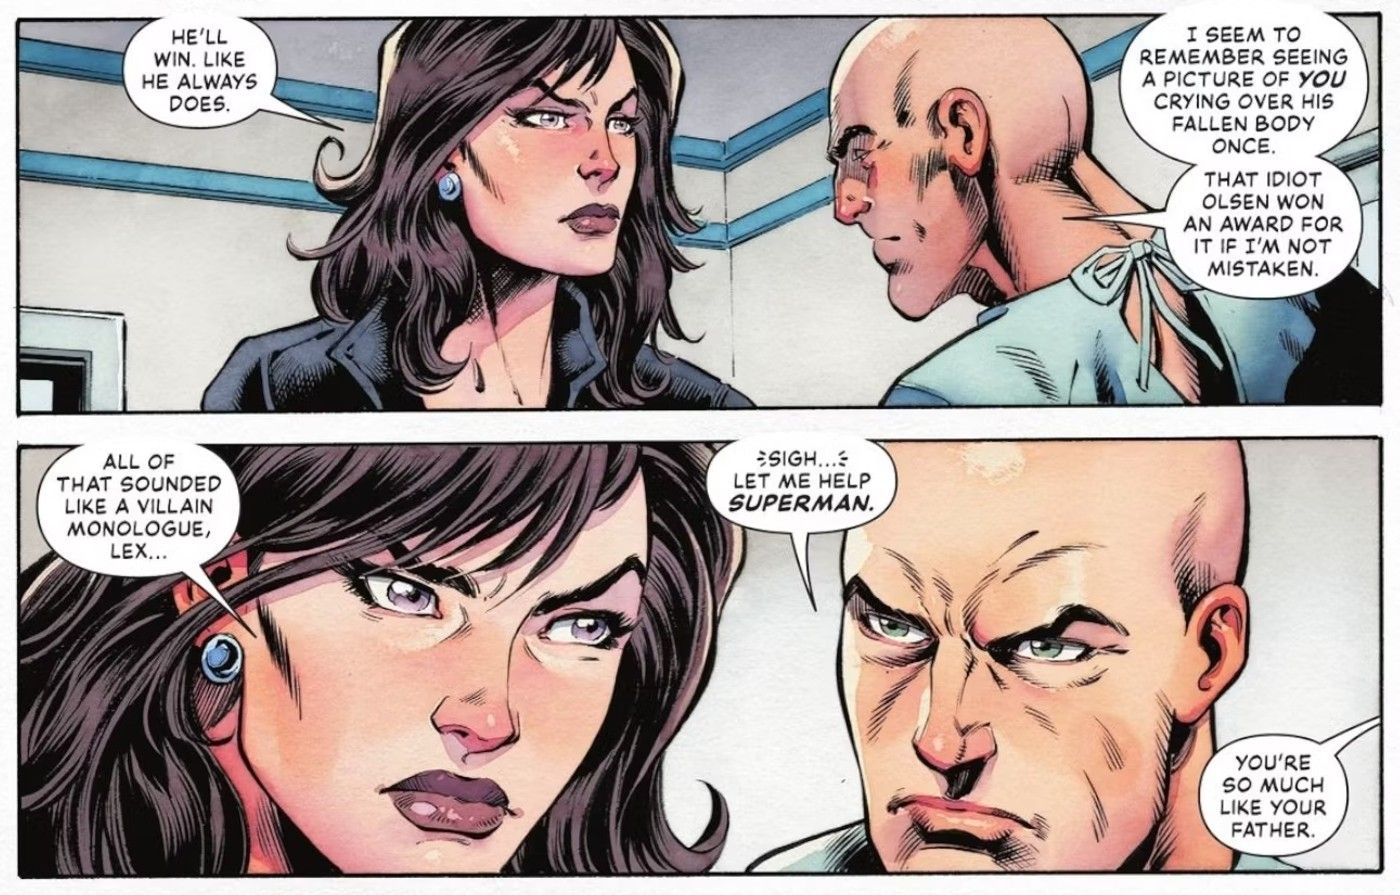 Lex Luthor Asks Lois Lane to Let Him Help Superman